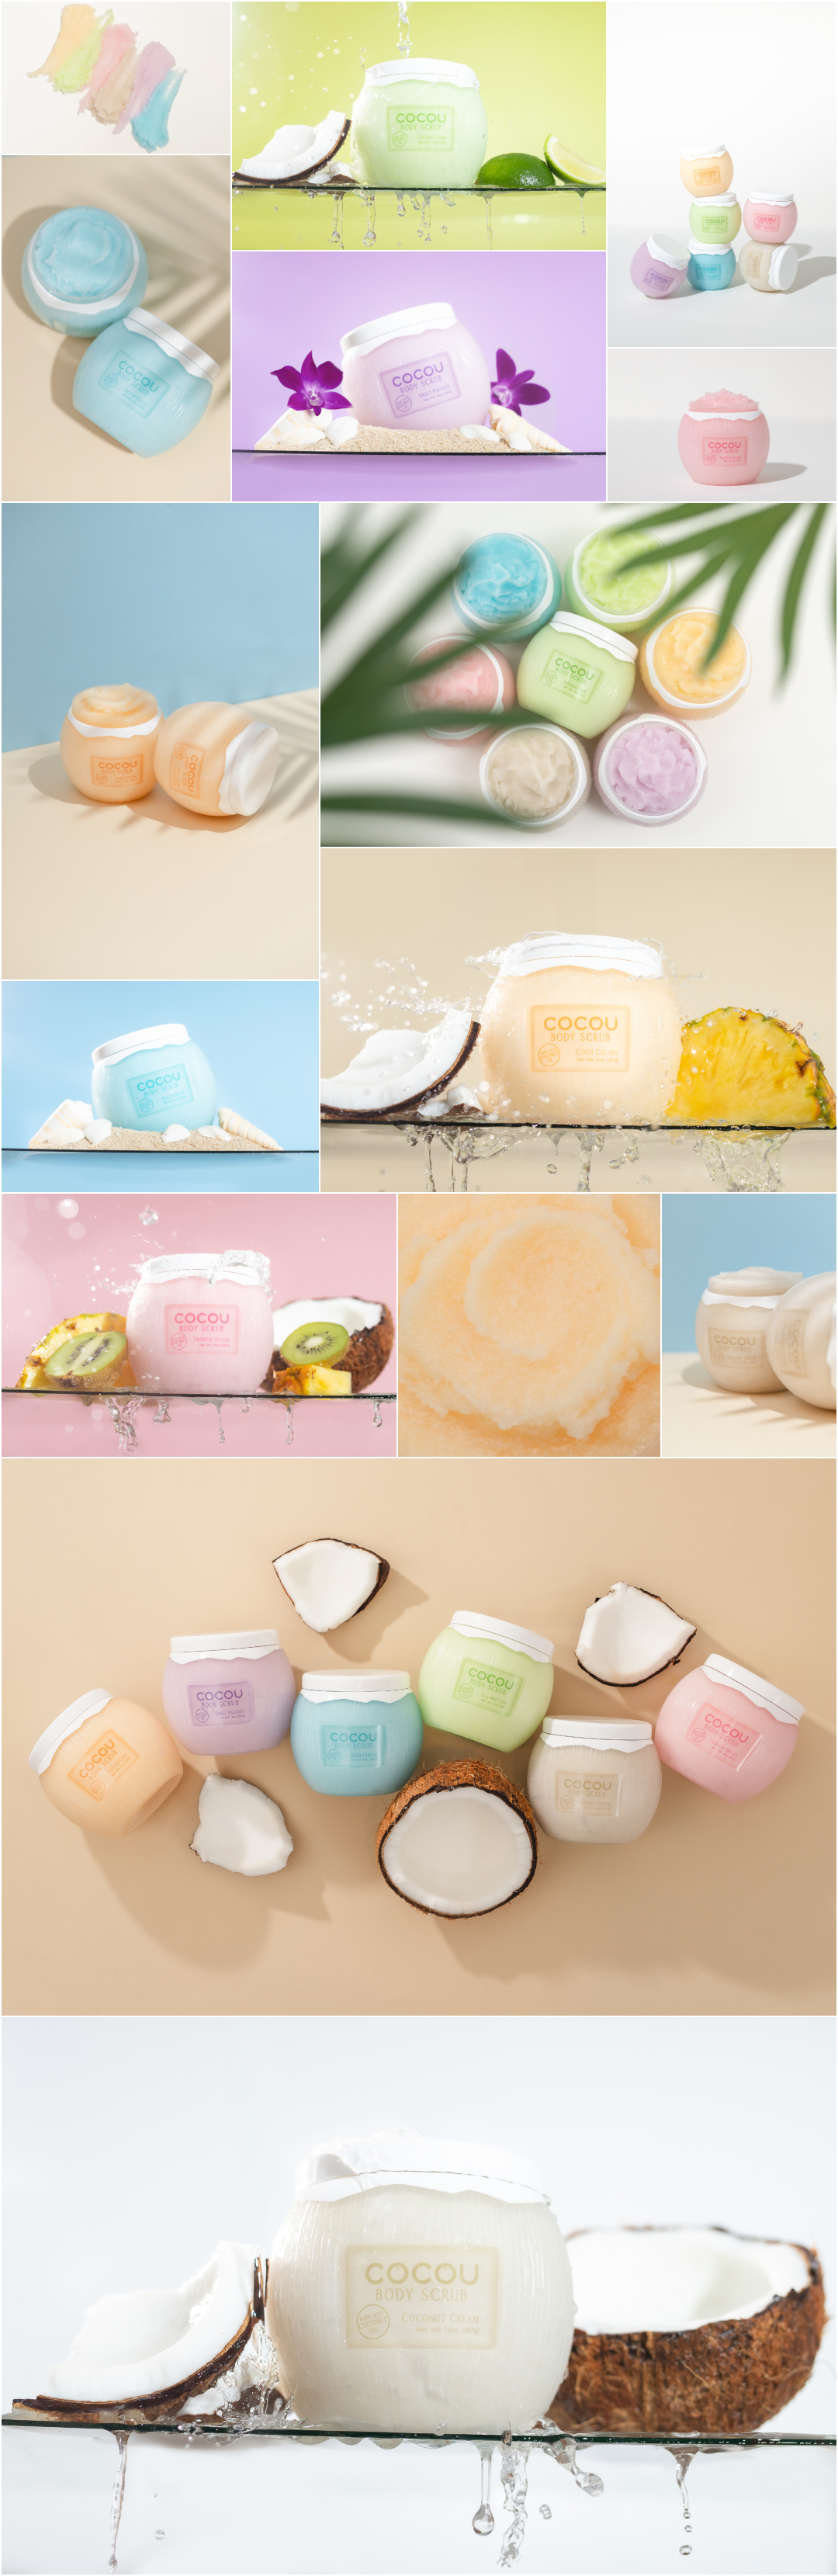 Skin Care Product Photography - Body Scrub Brand Photos